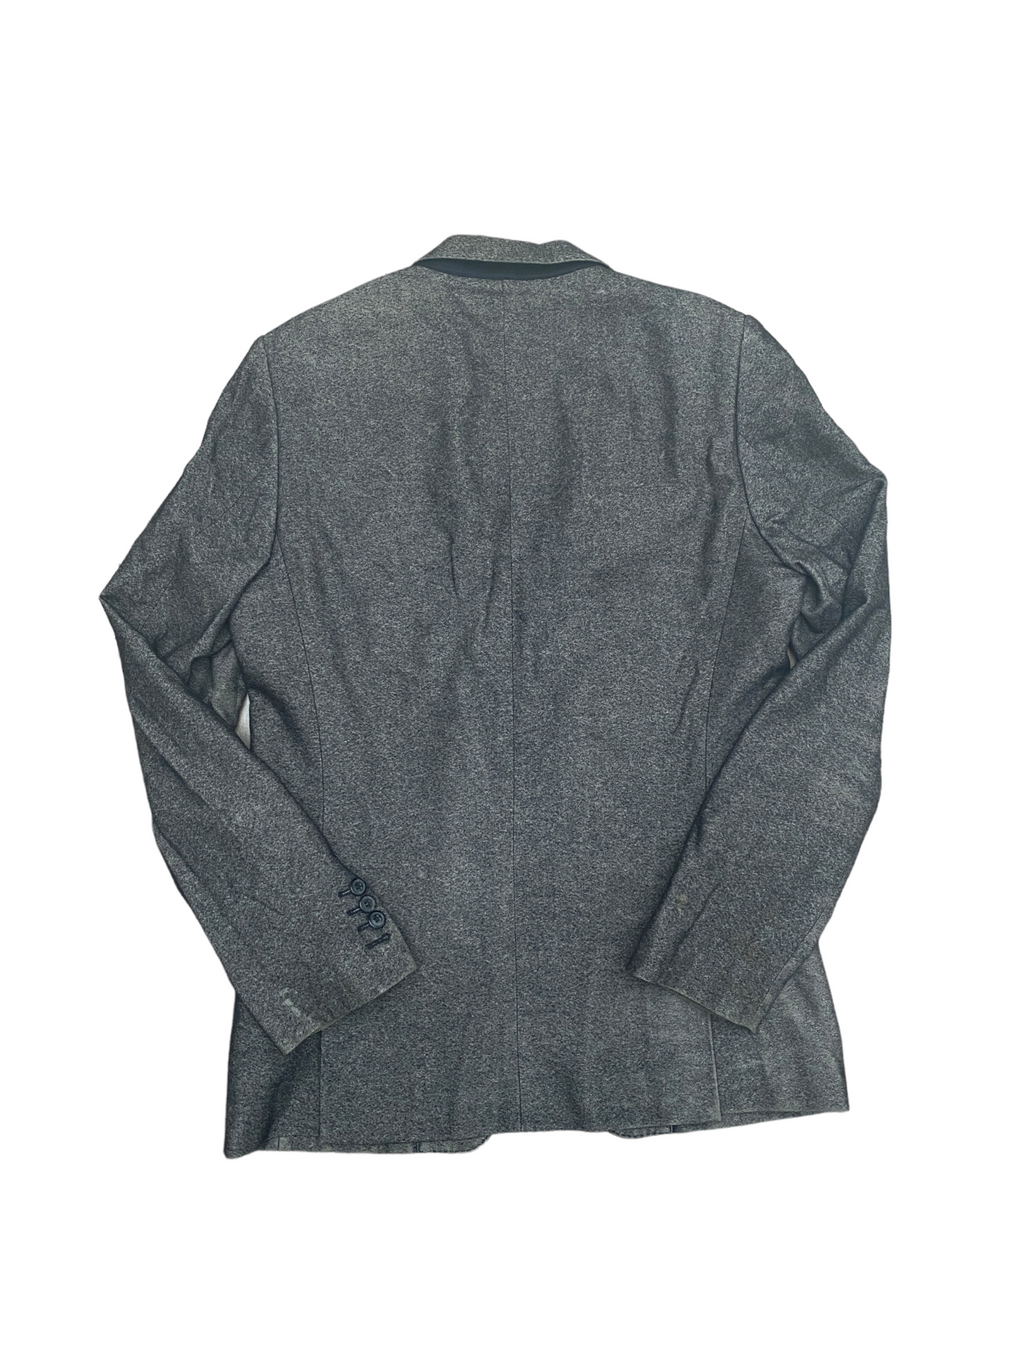 FW 2005 Grey Wool Blazer Jacket